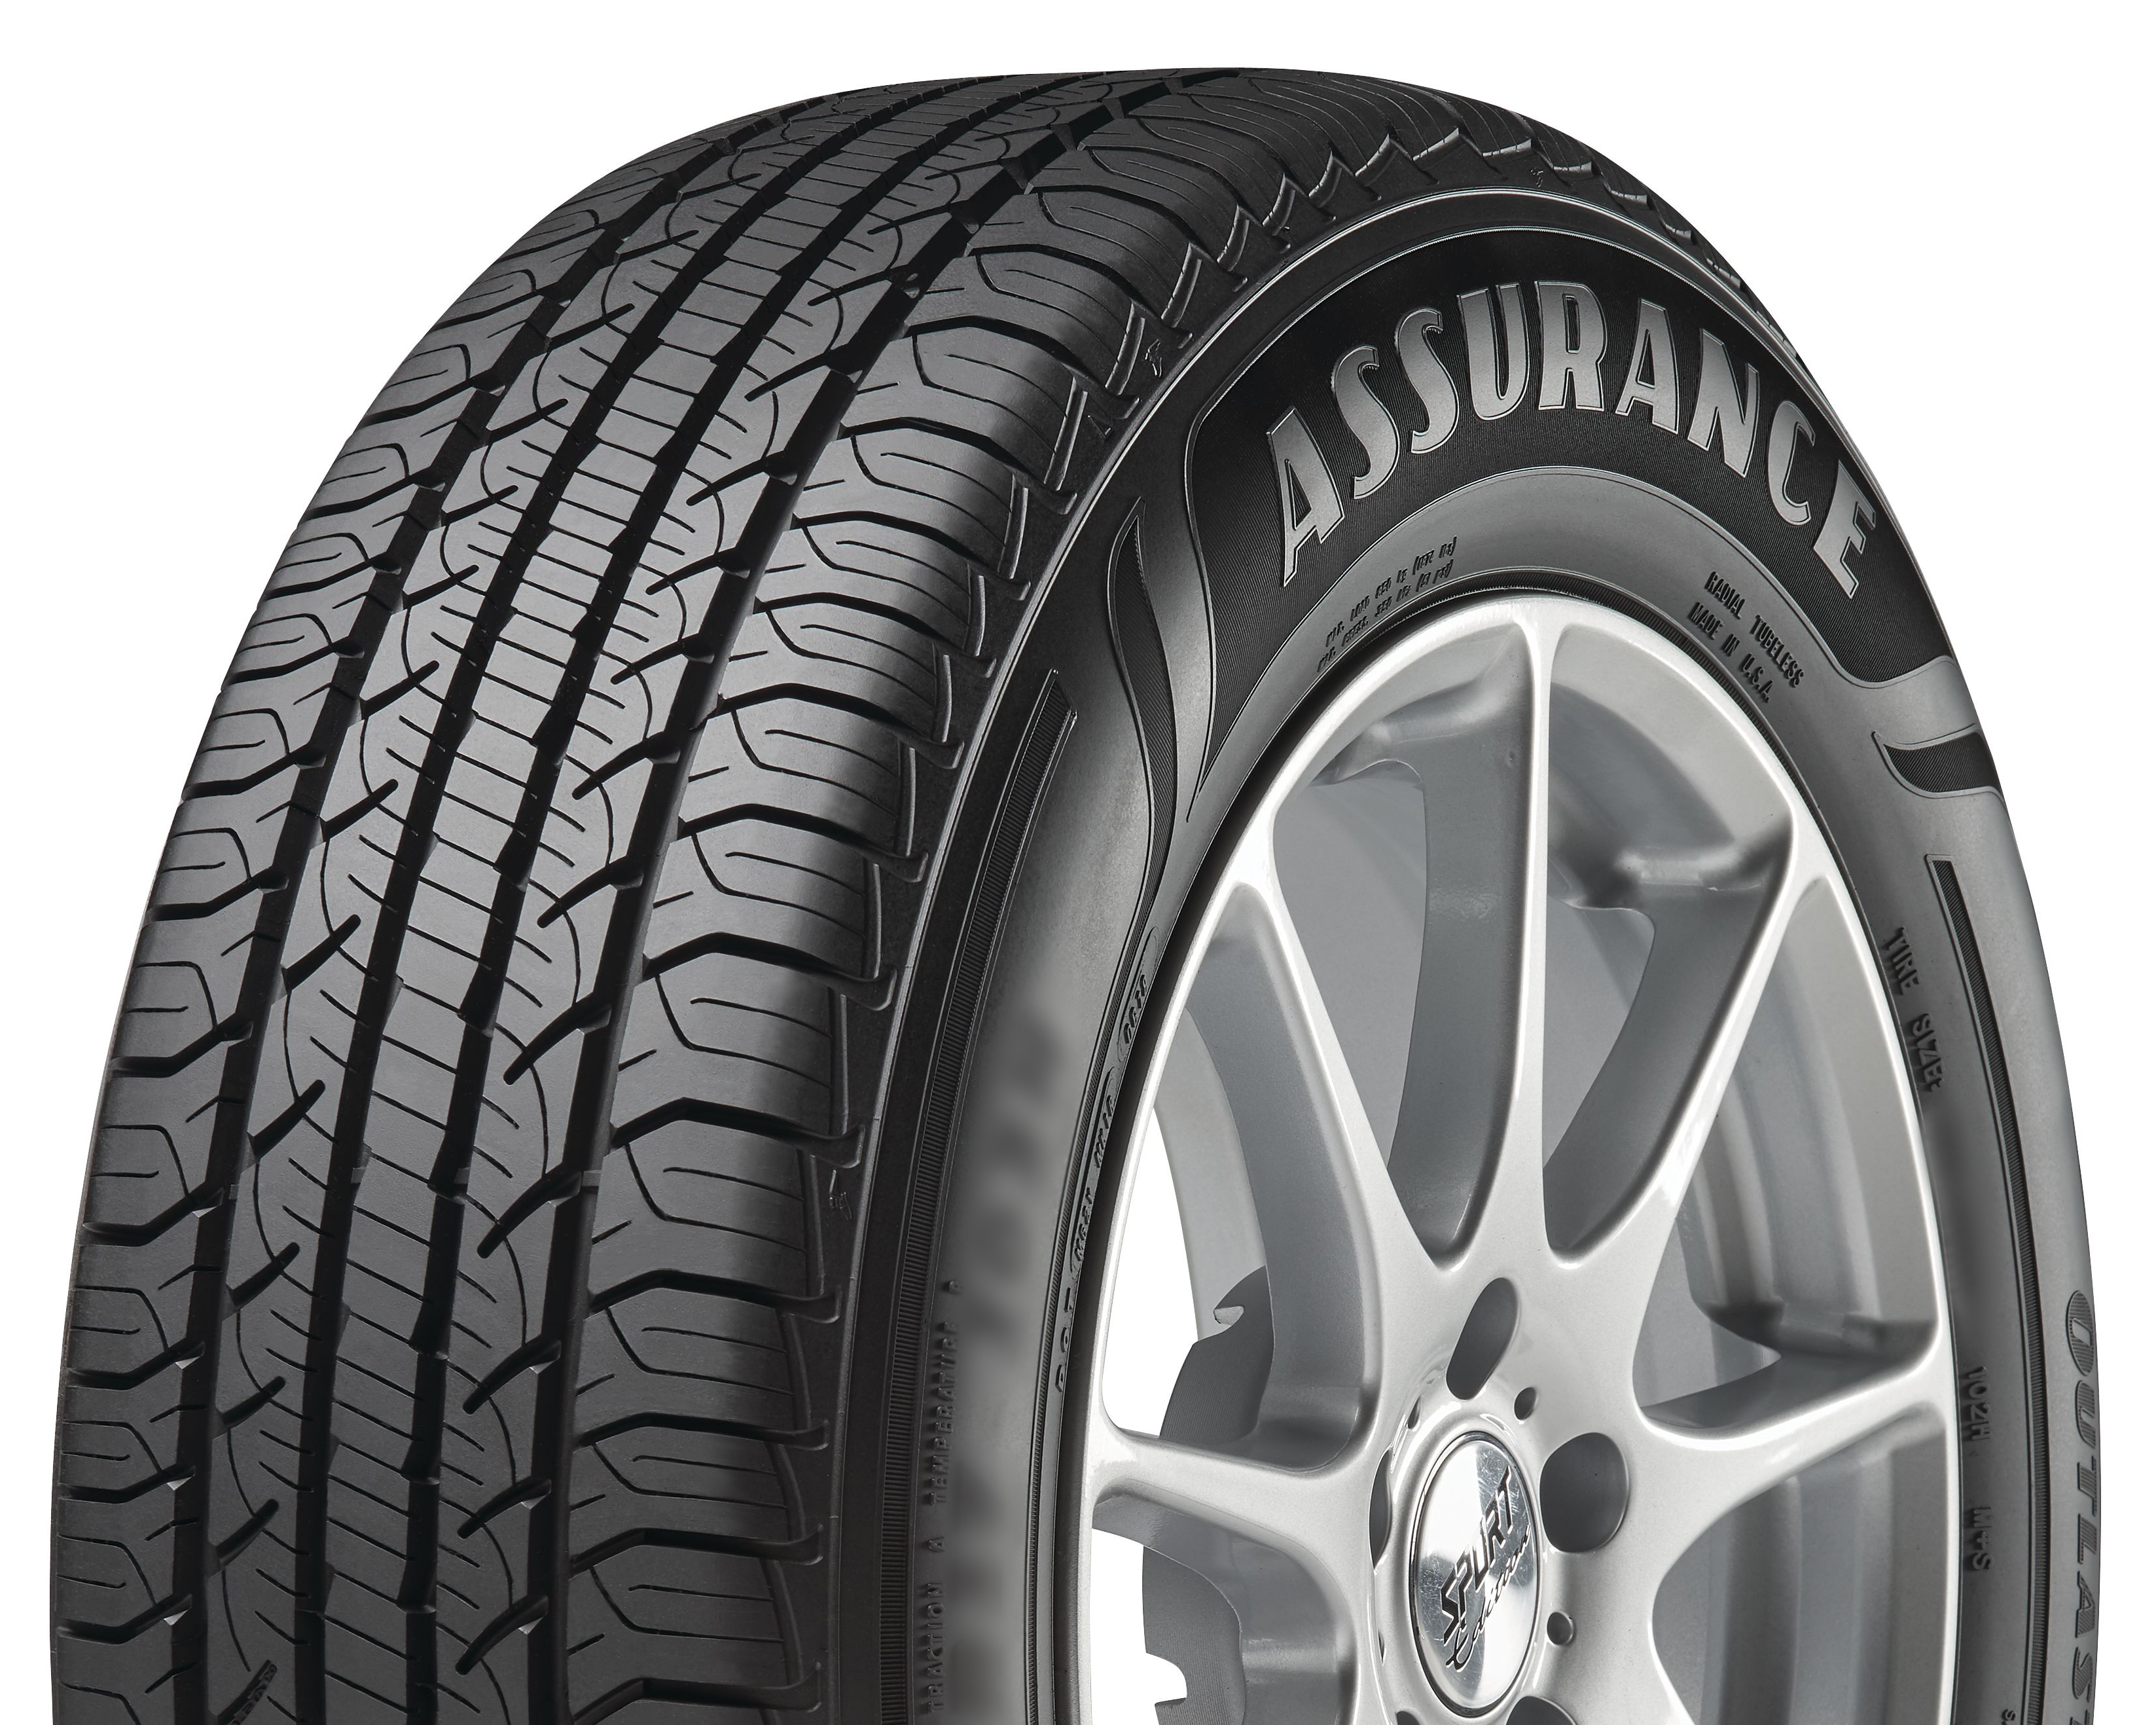 Goodyear Assurance Outlast 215/60R16 95V All-Season Tire - image 3 of 7